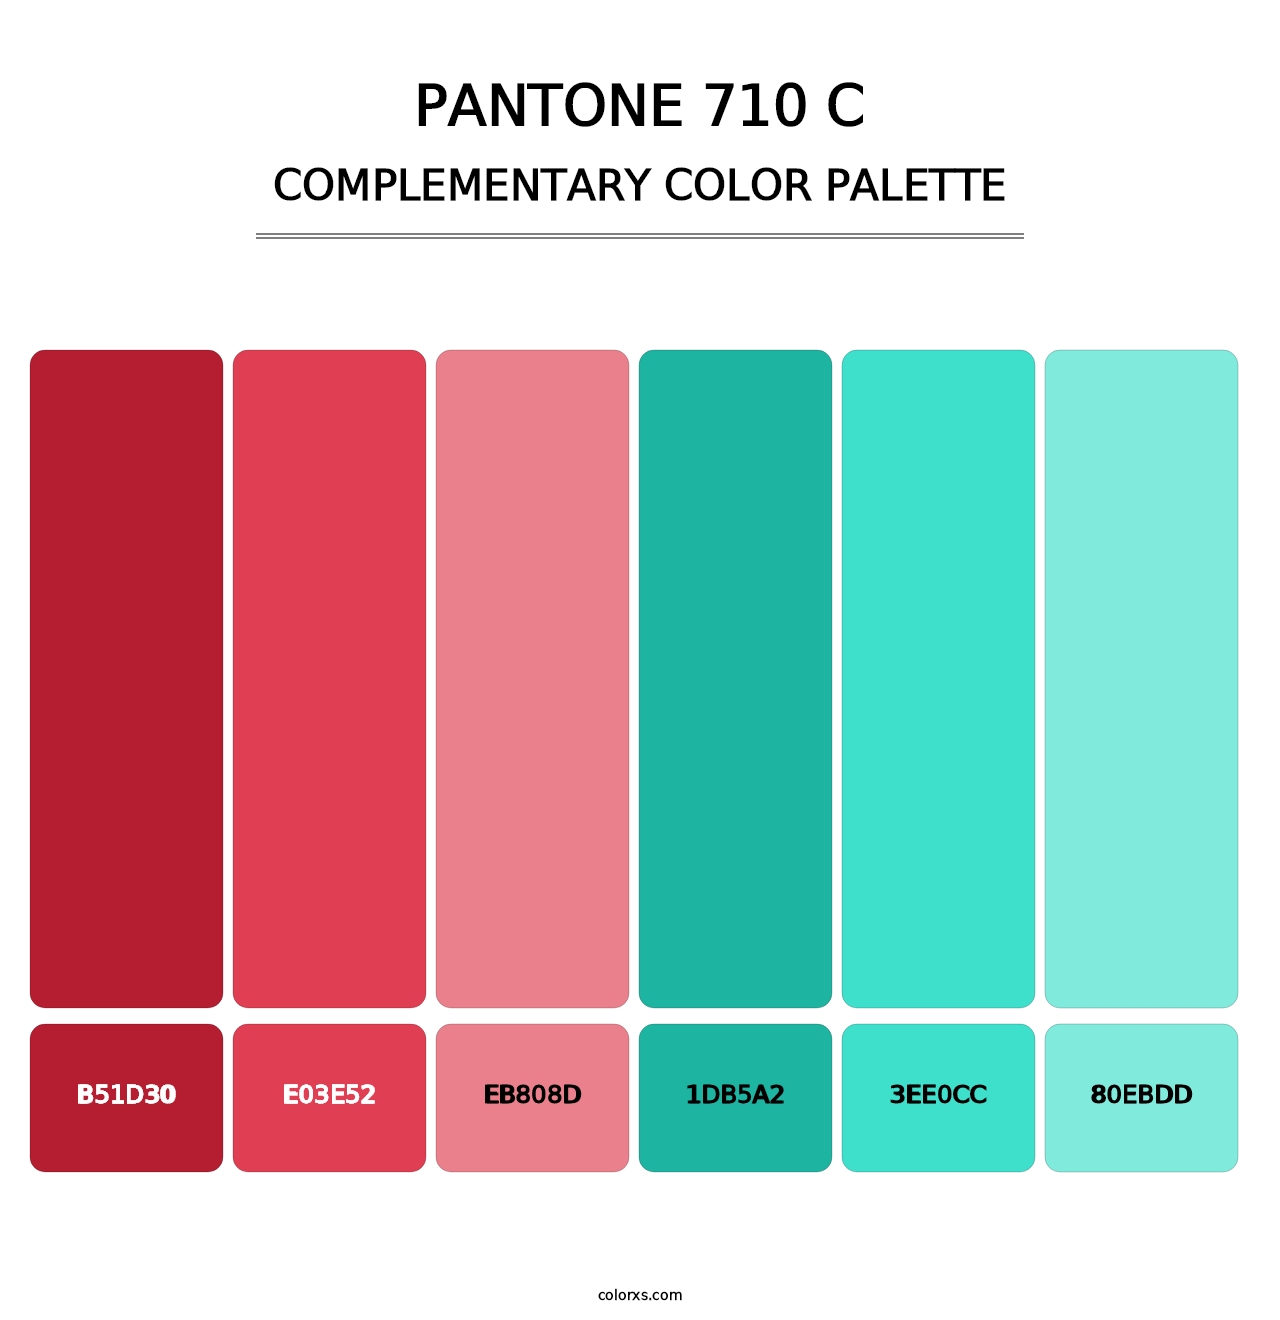 PANTONE 710 C - Complementary Color Palette